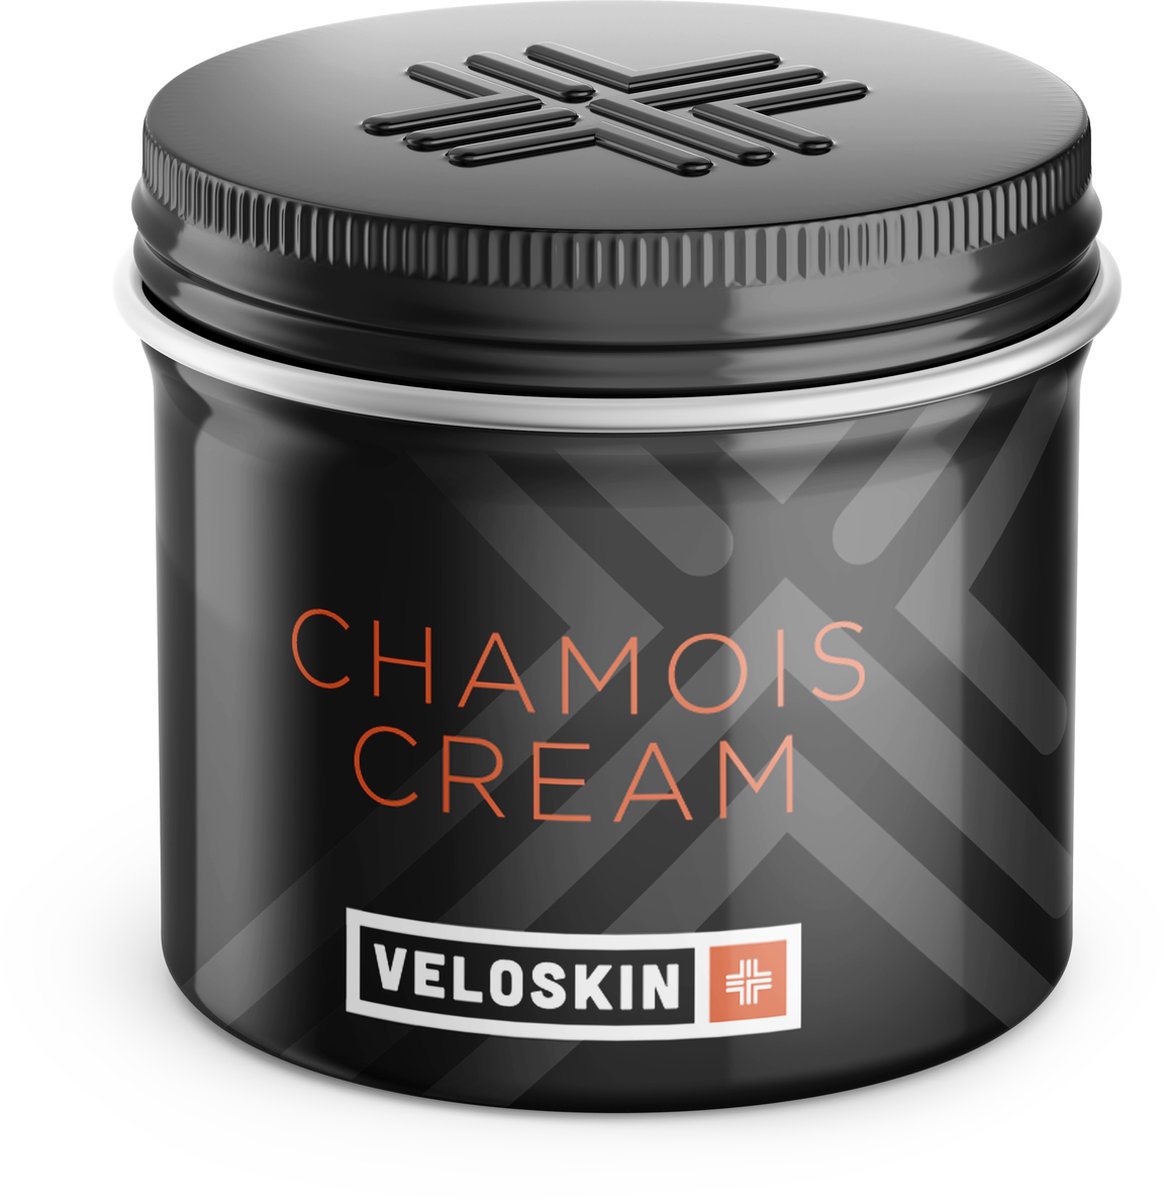 Veloskin - Zeemcrème - Chamois cream - 150 ml - Geen parabenen - Incl oa. cacaoboter, kokosolie, sheaboter